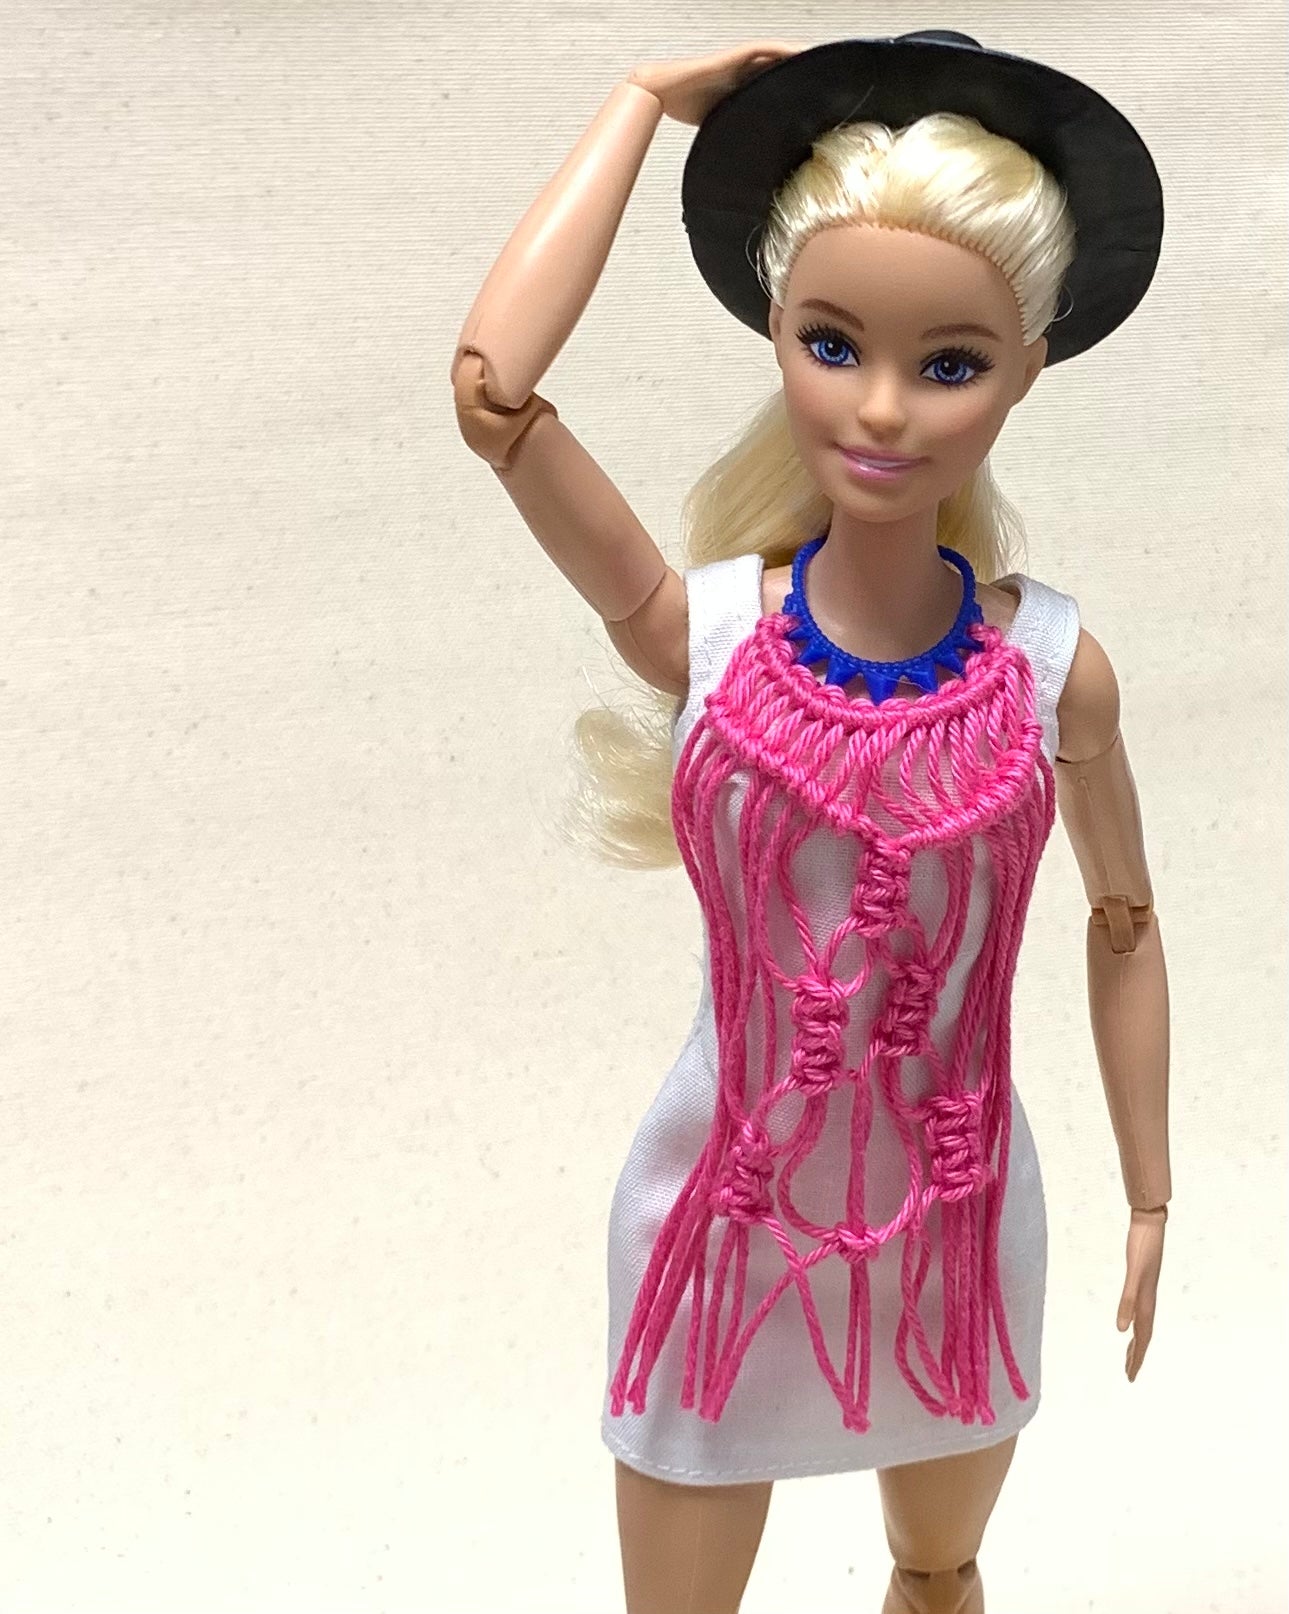 Mini macrame necklace - Barbie Doll wearing a Macrame Statement Necklace.